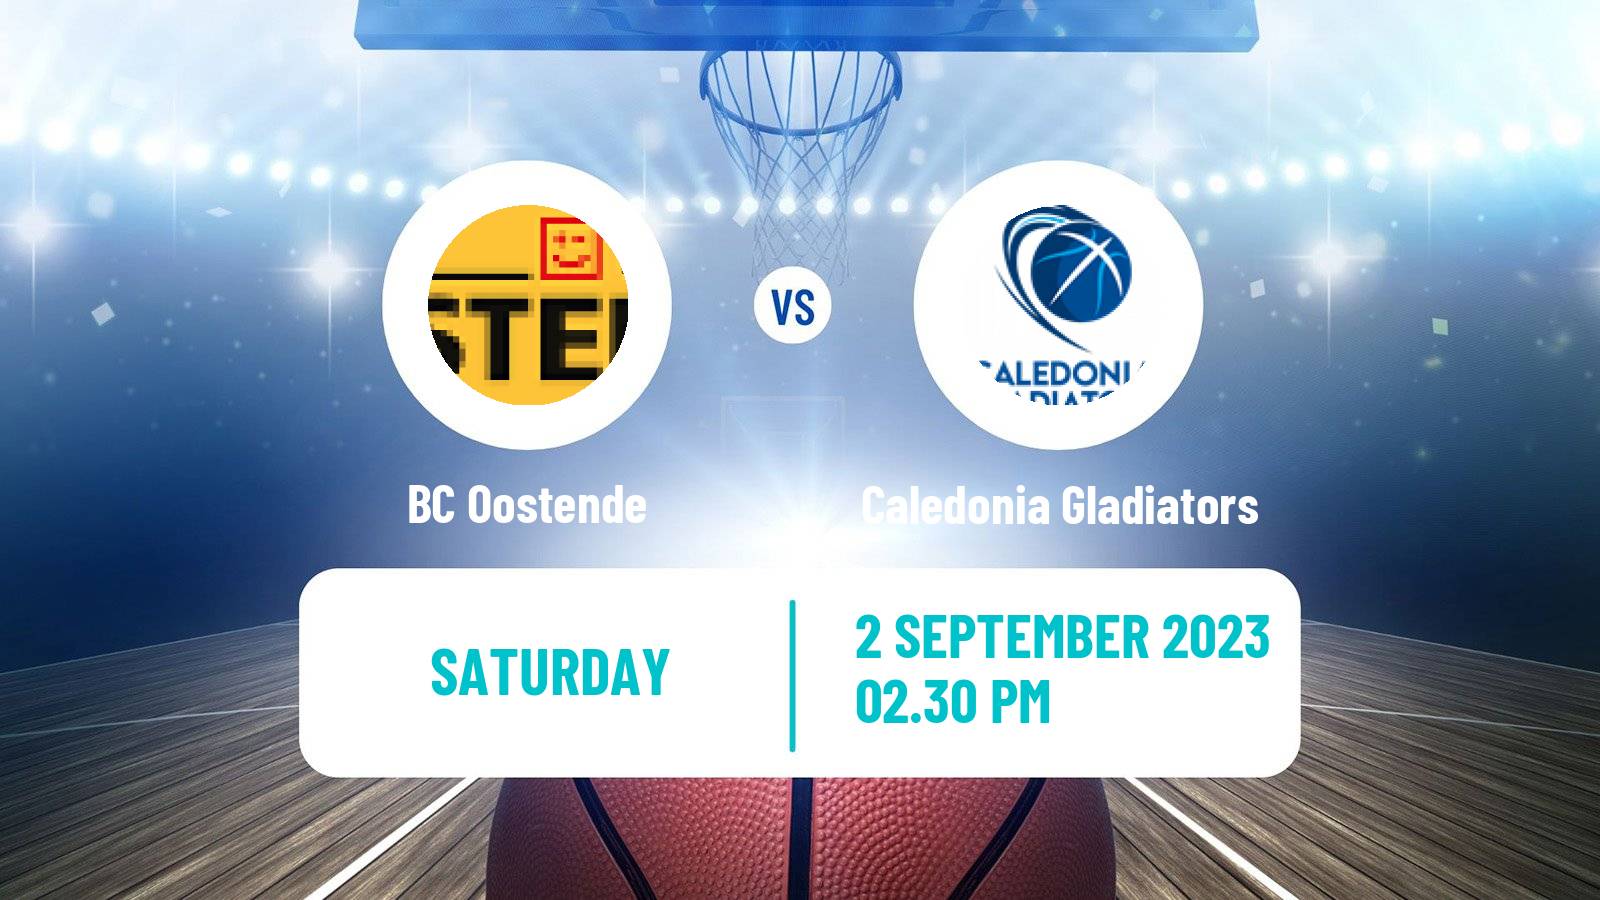 Basketball Club Friendly Basketball Oostende - Caledonia Gladiators